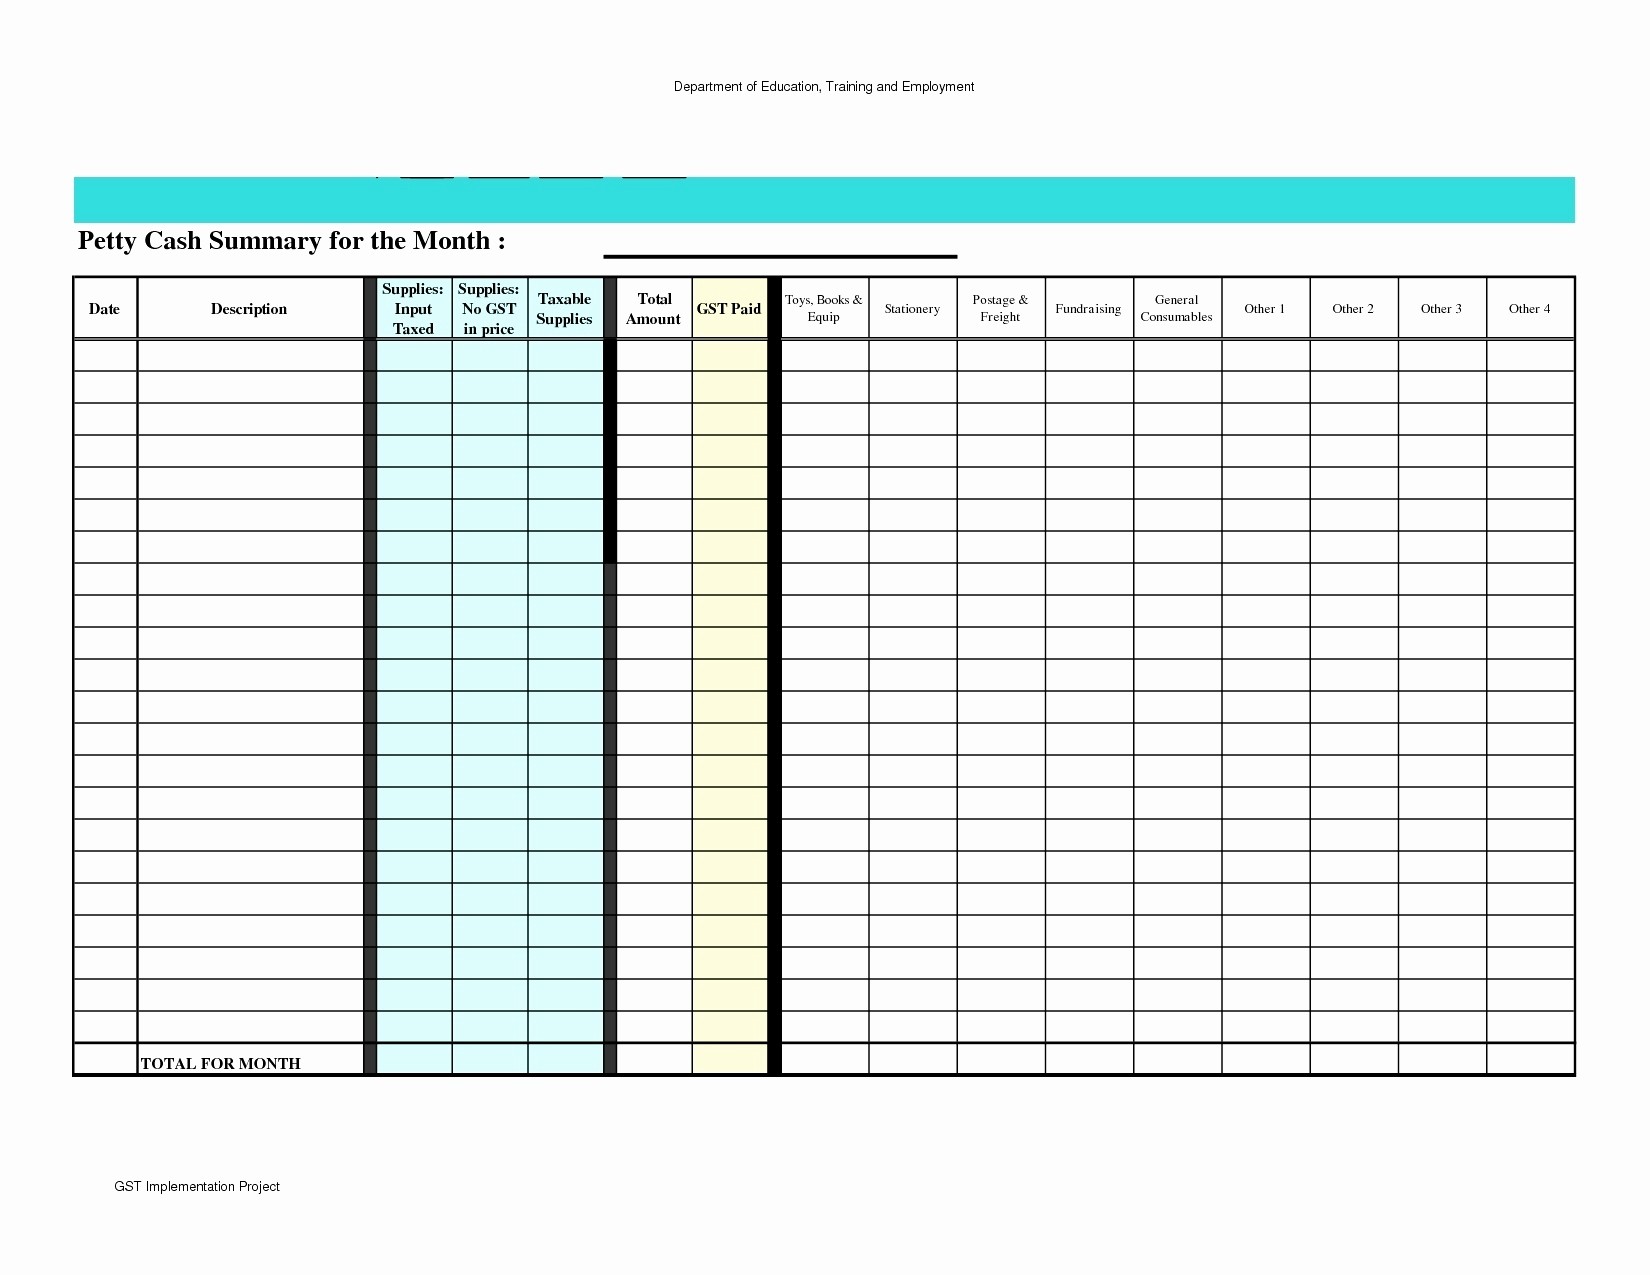 Lularoe Accounting Lovely Spreadsheet New Document Spreadsheets For